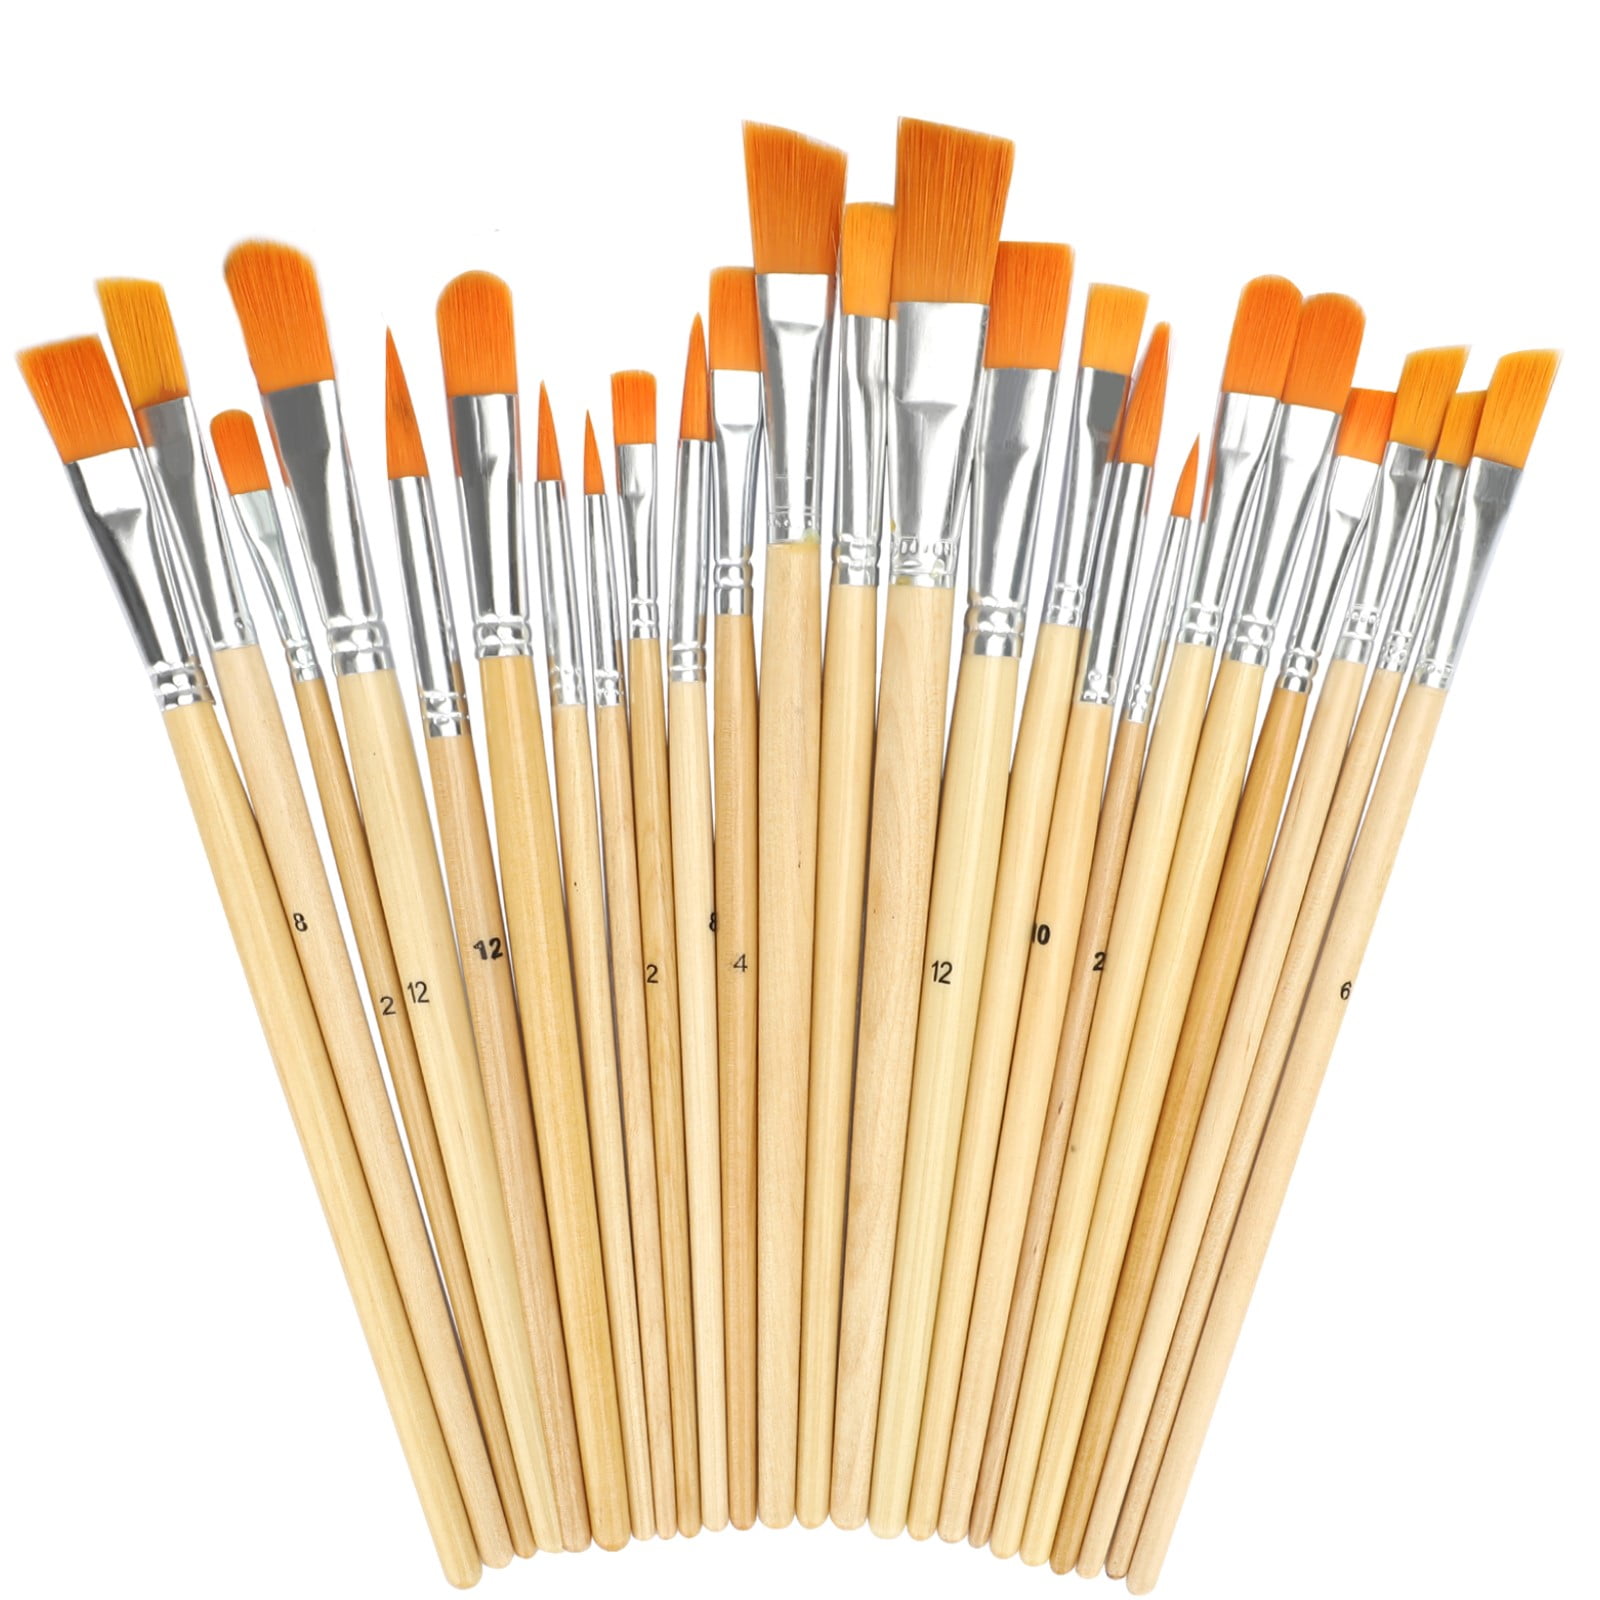 Professional Acrylic Paint Set with Brushes